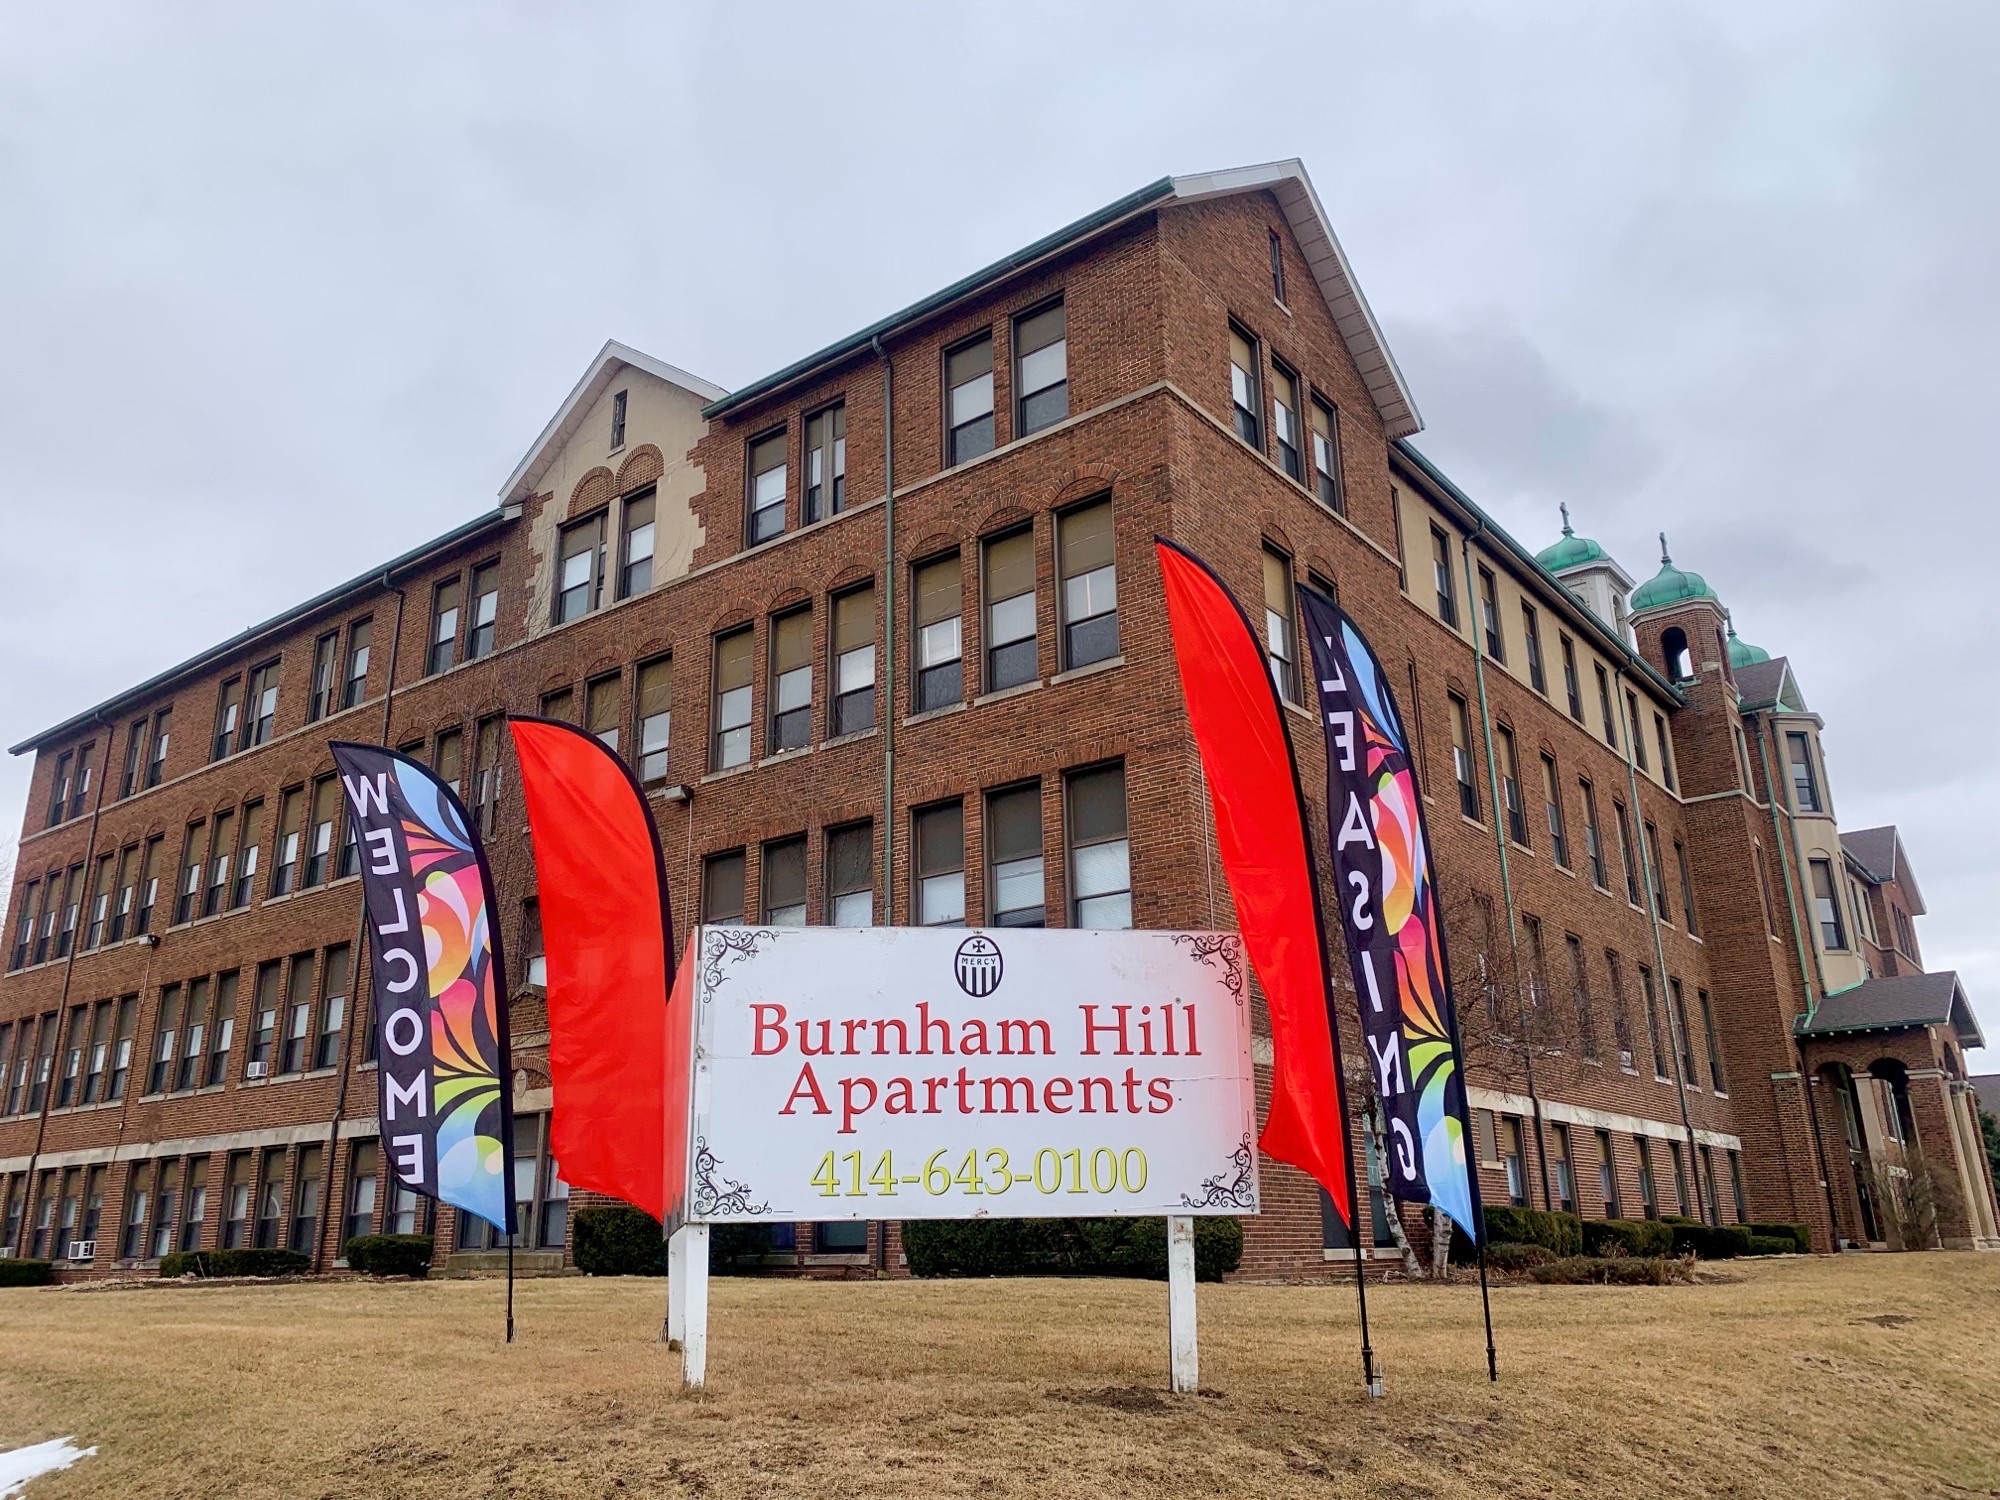 Burnham Hill Apartments